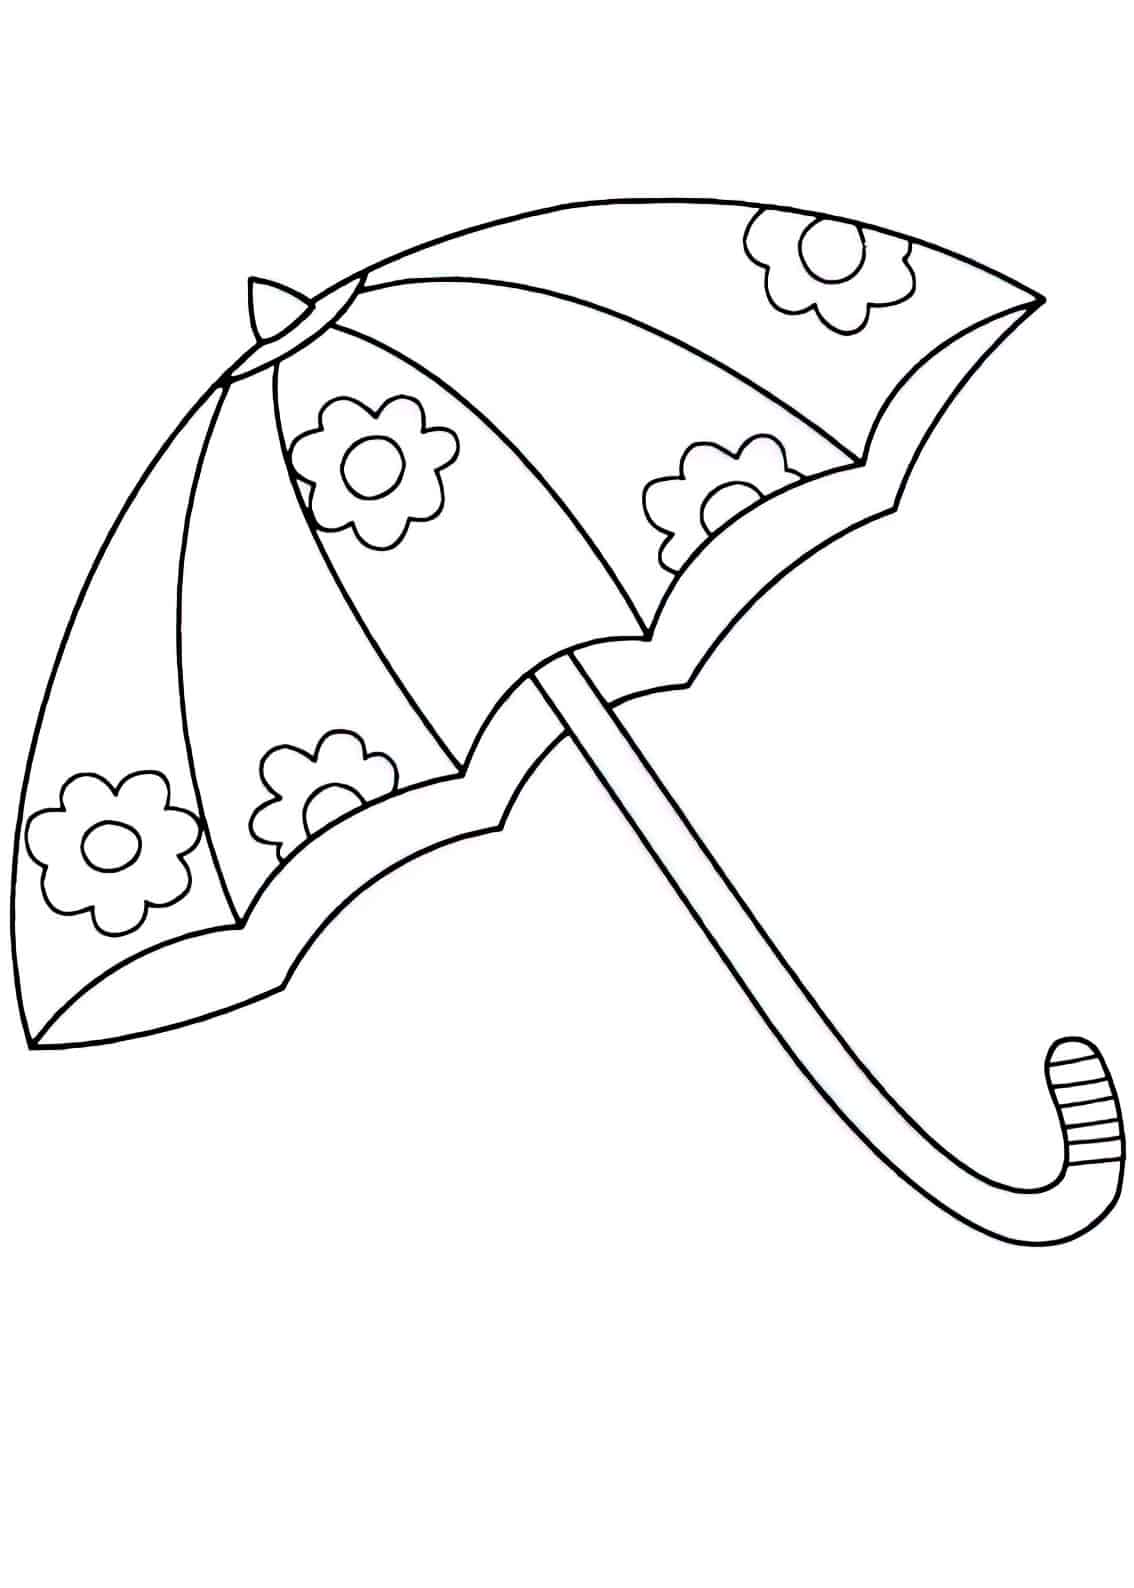 Рисунок зонтик с узорами